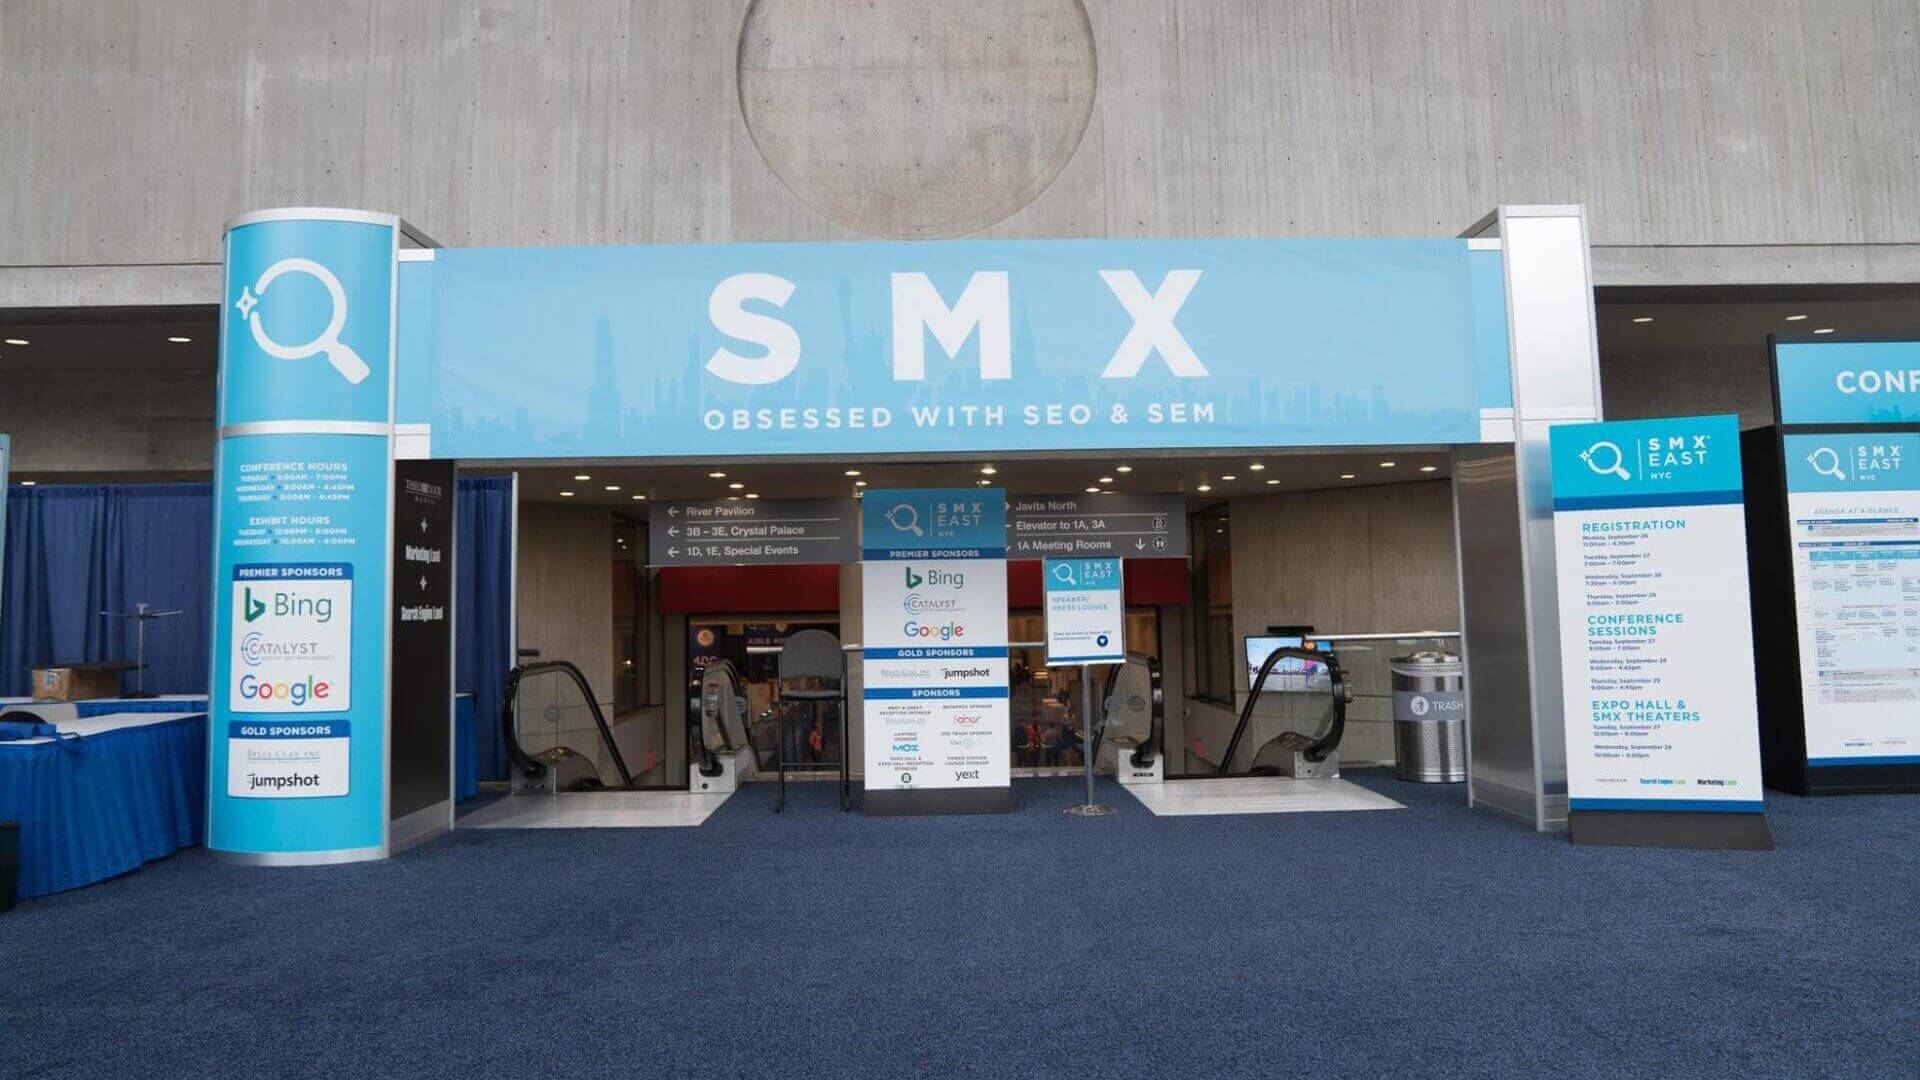 smx-east-2016-entrance